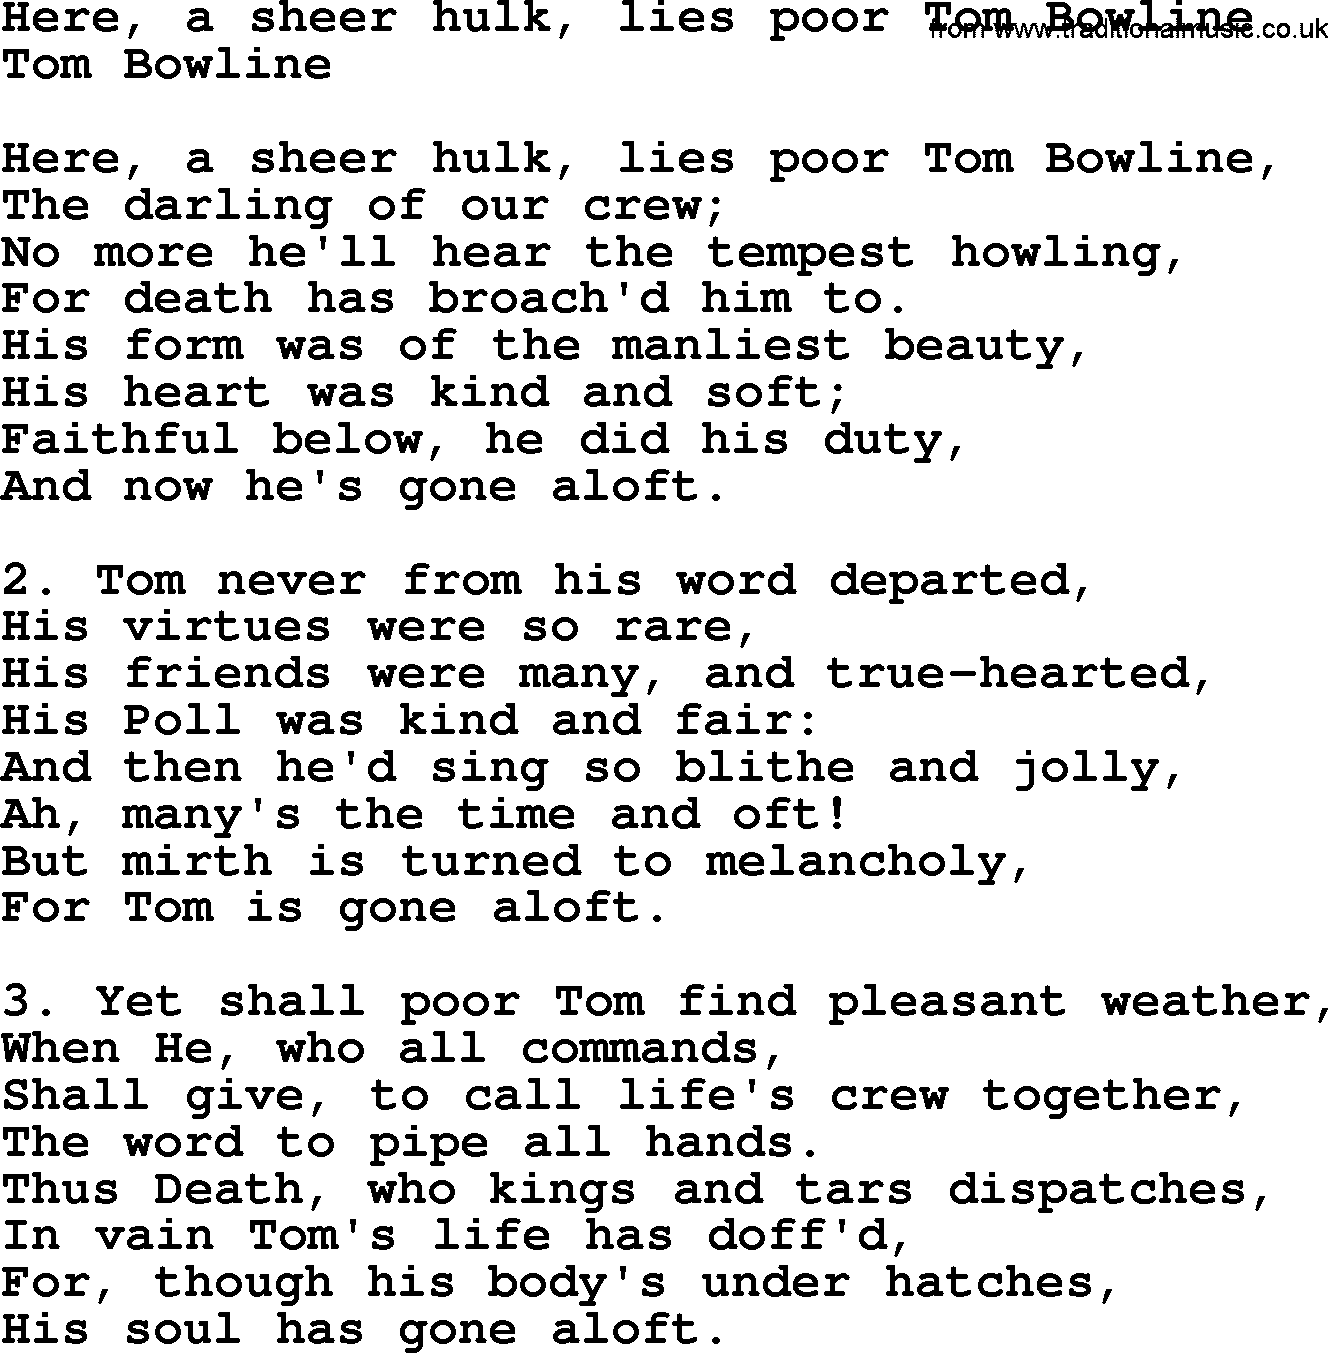 Sea Song or Shantie: Here A Sheer Hulk Lies Poor Tom Bowline, lyrics